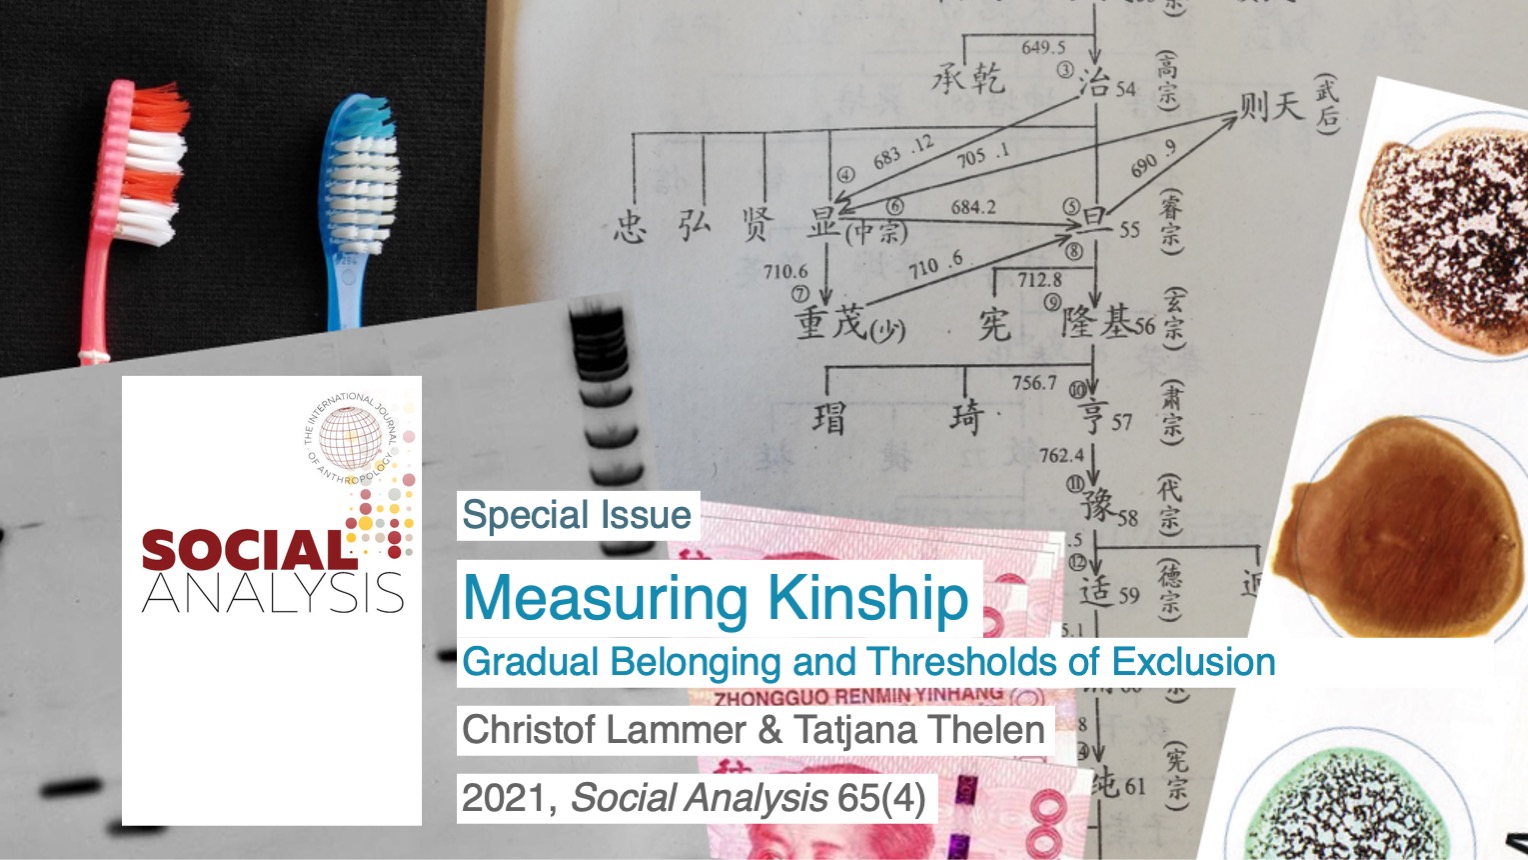 Christof Lammer, Tatjana Thelen: Measuring Kinship. Gradual Belonging and Thresholds of Exclusion. 2021, Social Analysis 65(4)